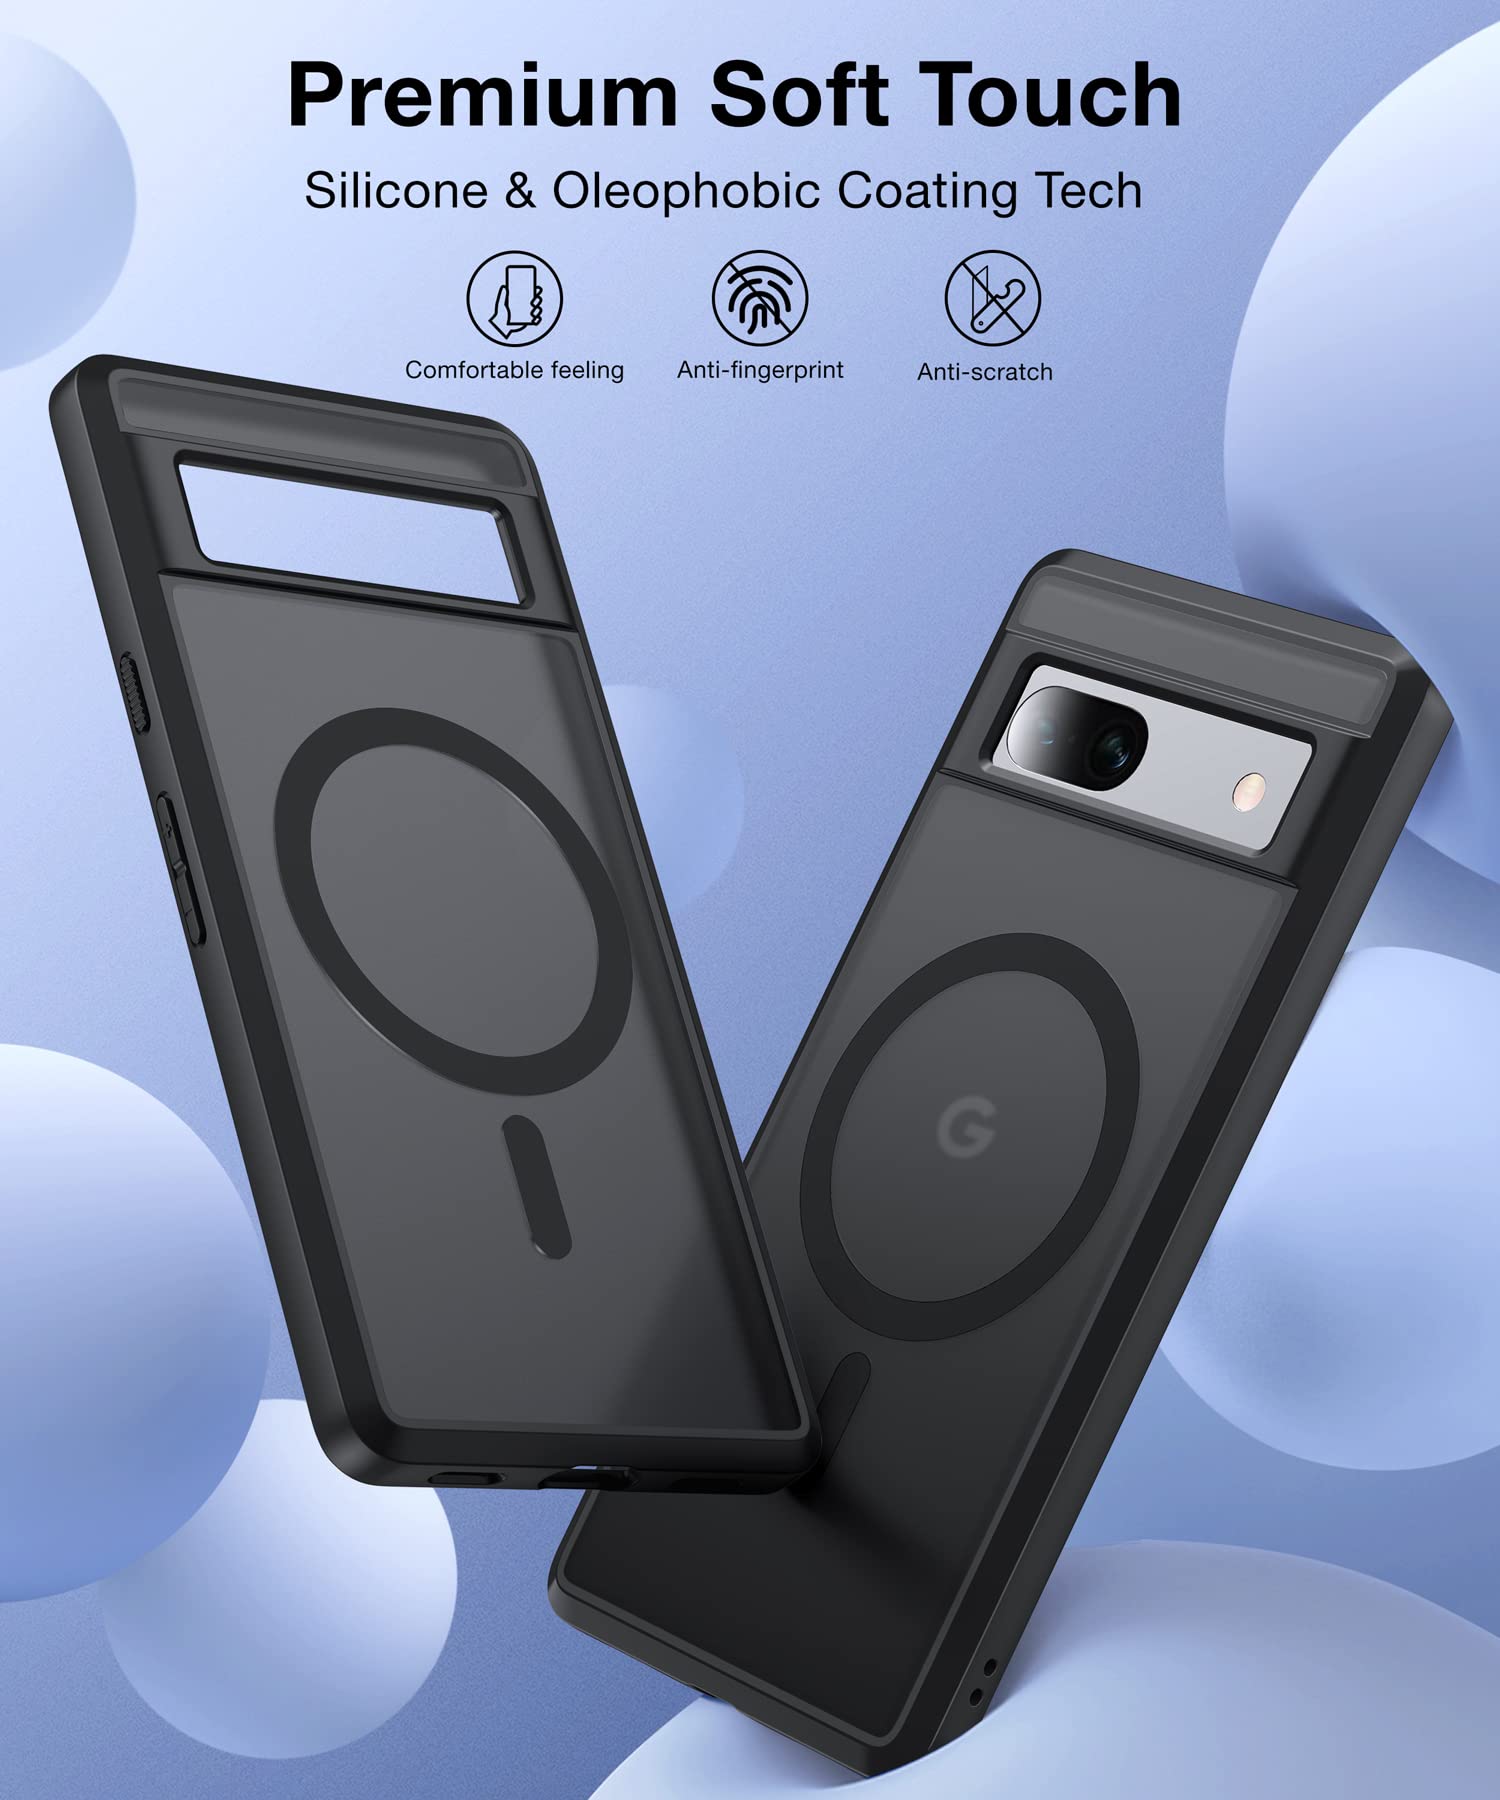 FNDMIL NO.1 Magnetic for Google Pixel 7a Case [Compatible with MagSafe][Anti-Fingerprint][Slim Fit][Military Shockproof] Translucent Matte Hard Back Pixel 7a 5G Phone Cover, Black